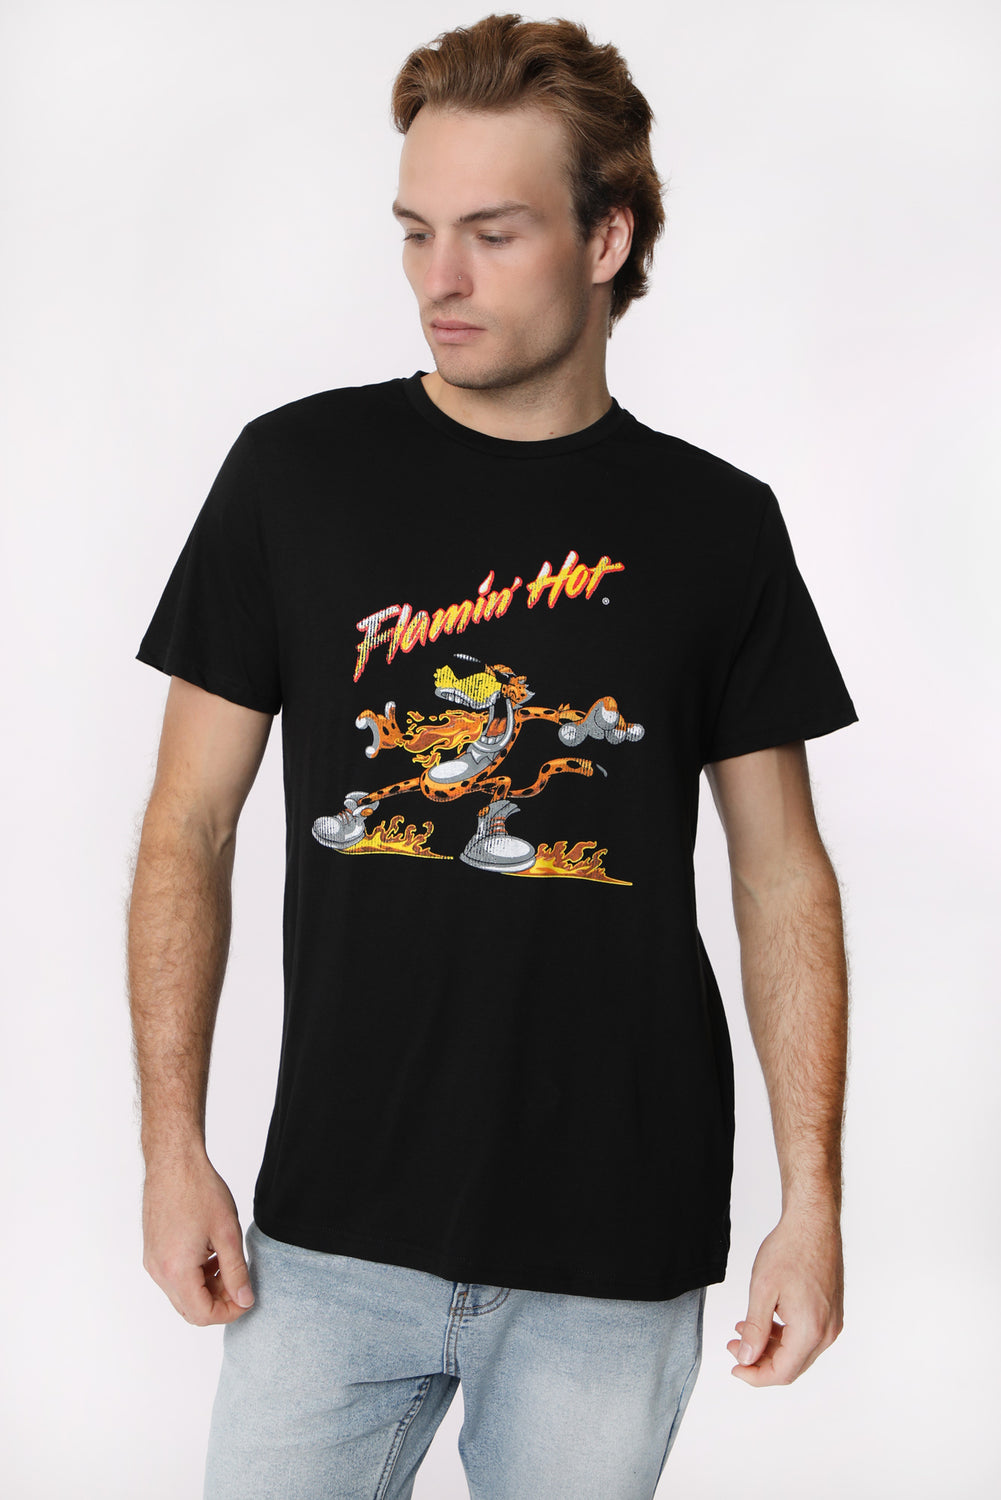 T-Shirt Imprimé Flamin' Hot Cheetos Homme T-Shirt Imprimé Flamin' Hot Cheetos Homme